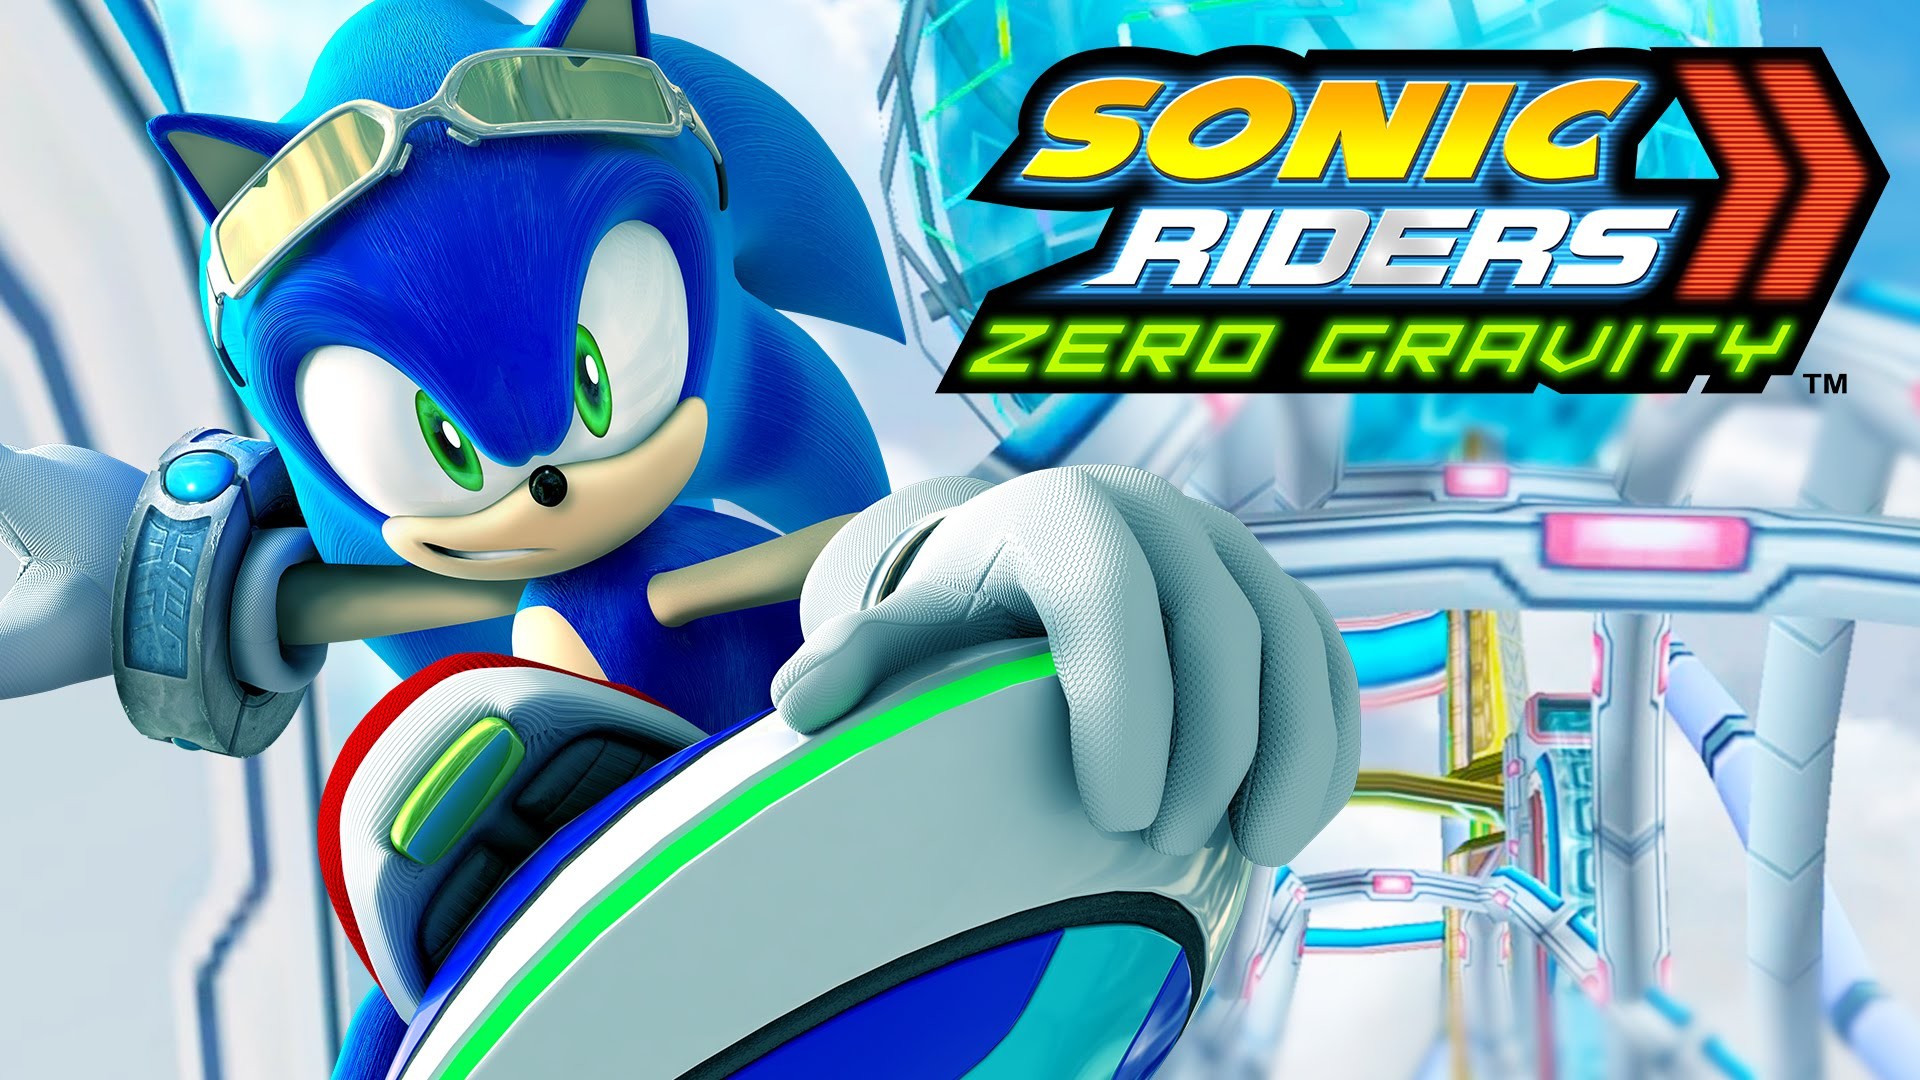 free download sonic free riders zero gravity